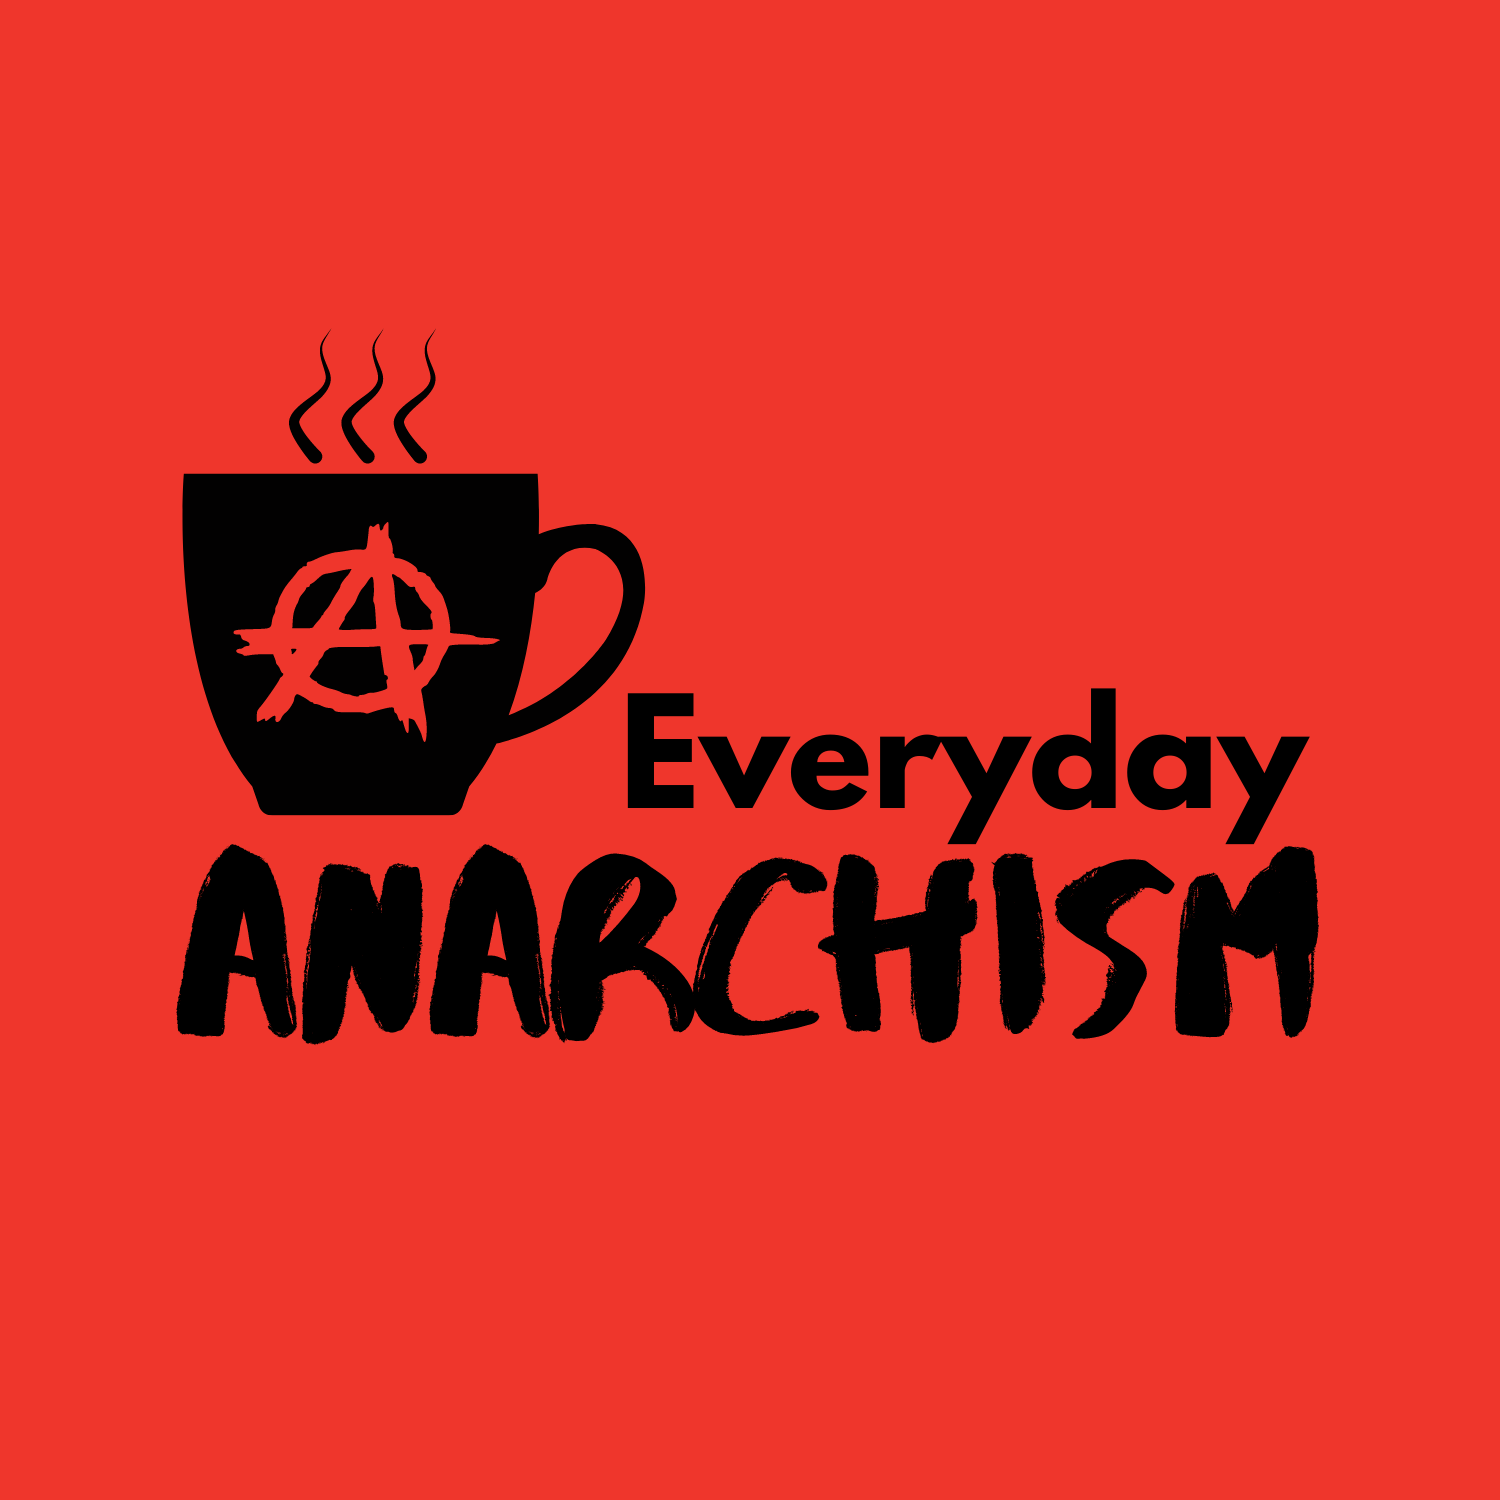 Artwork for Everyday Anarchism